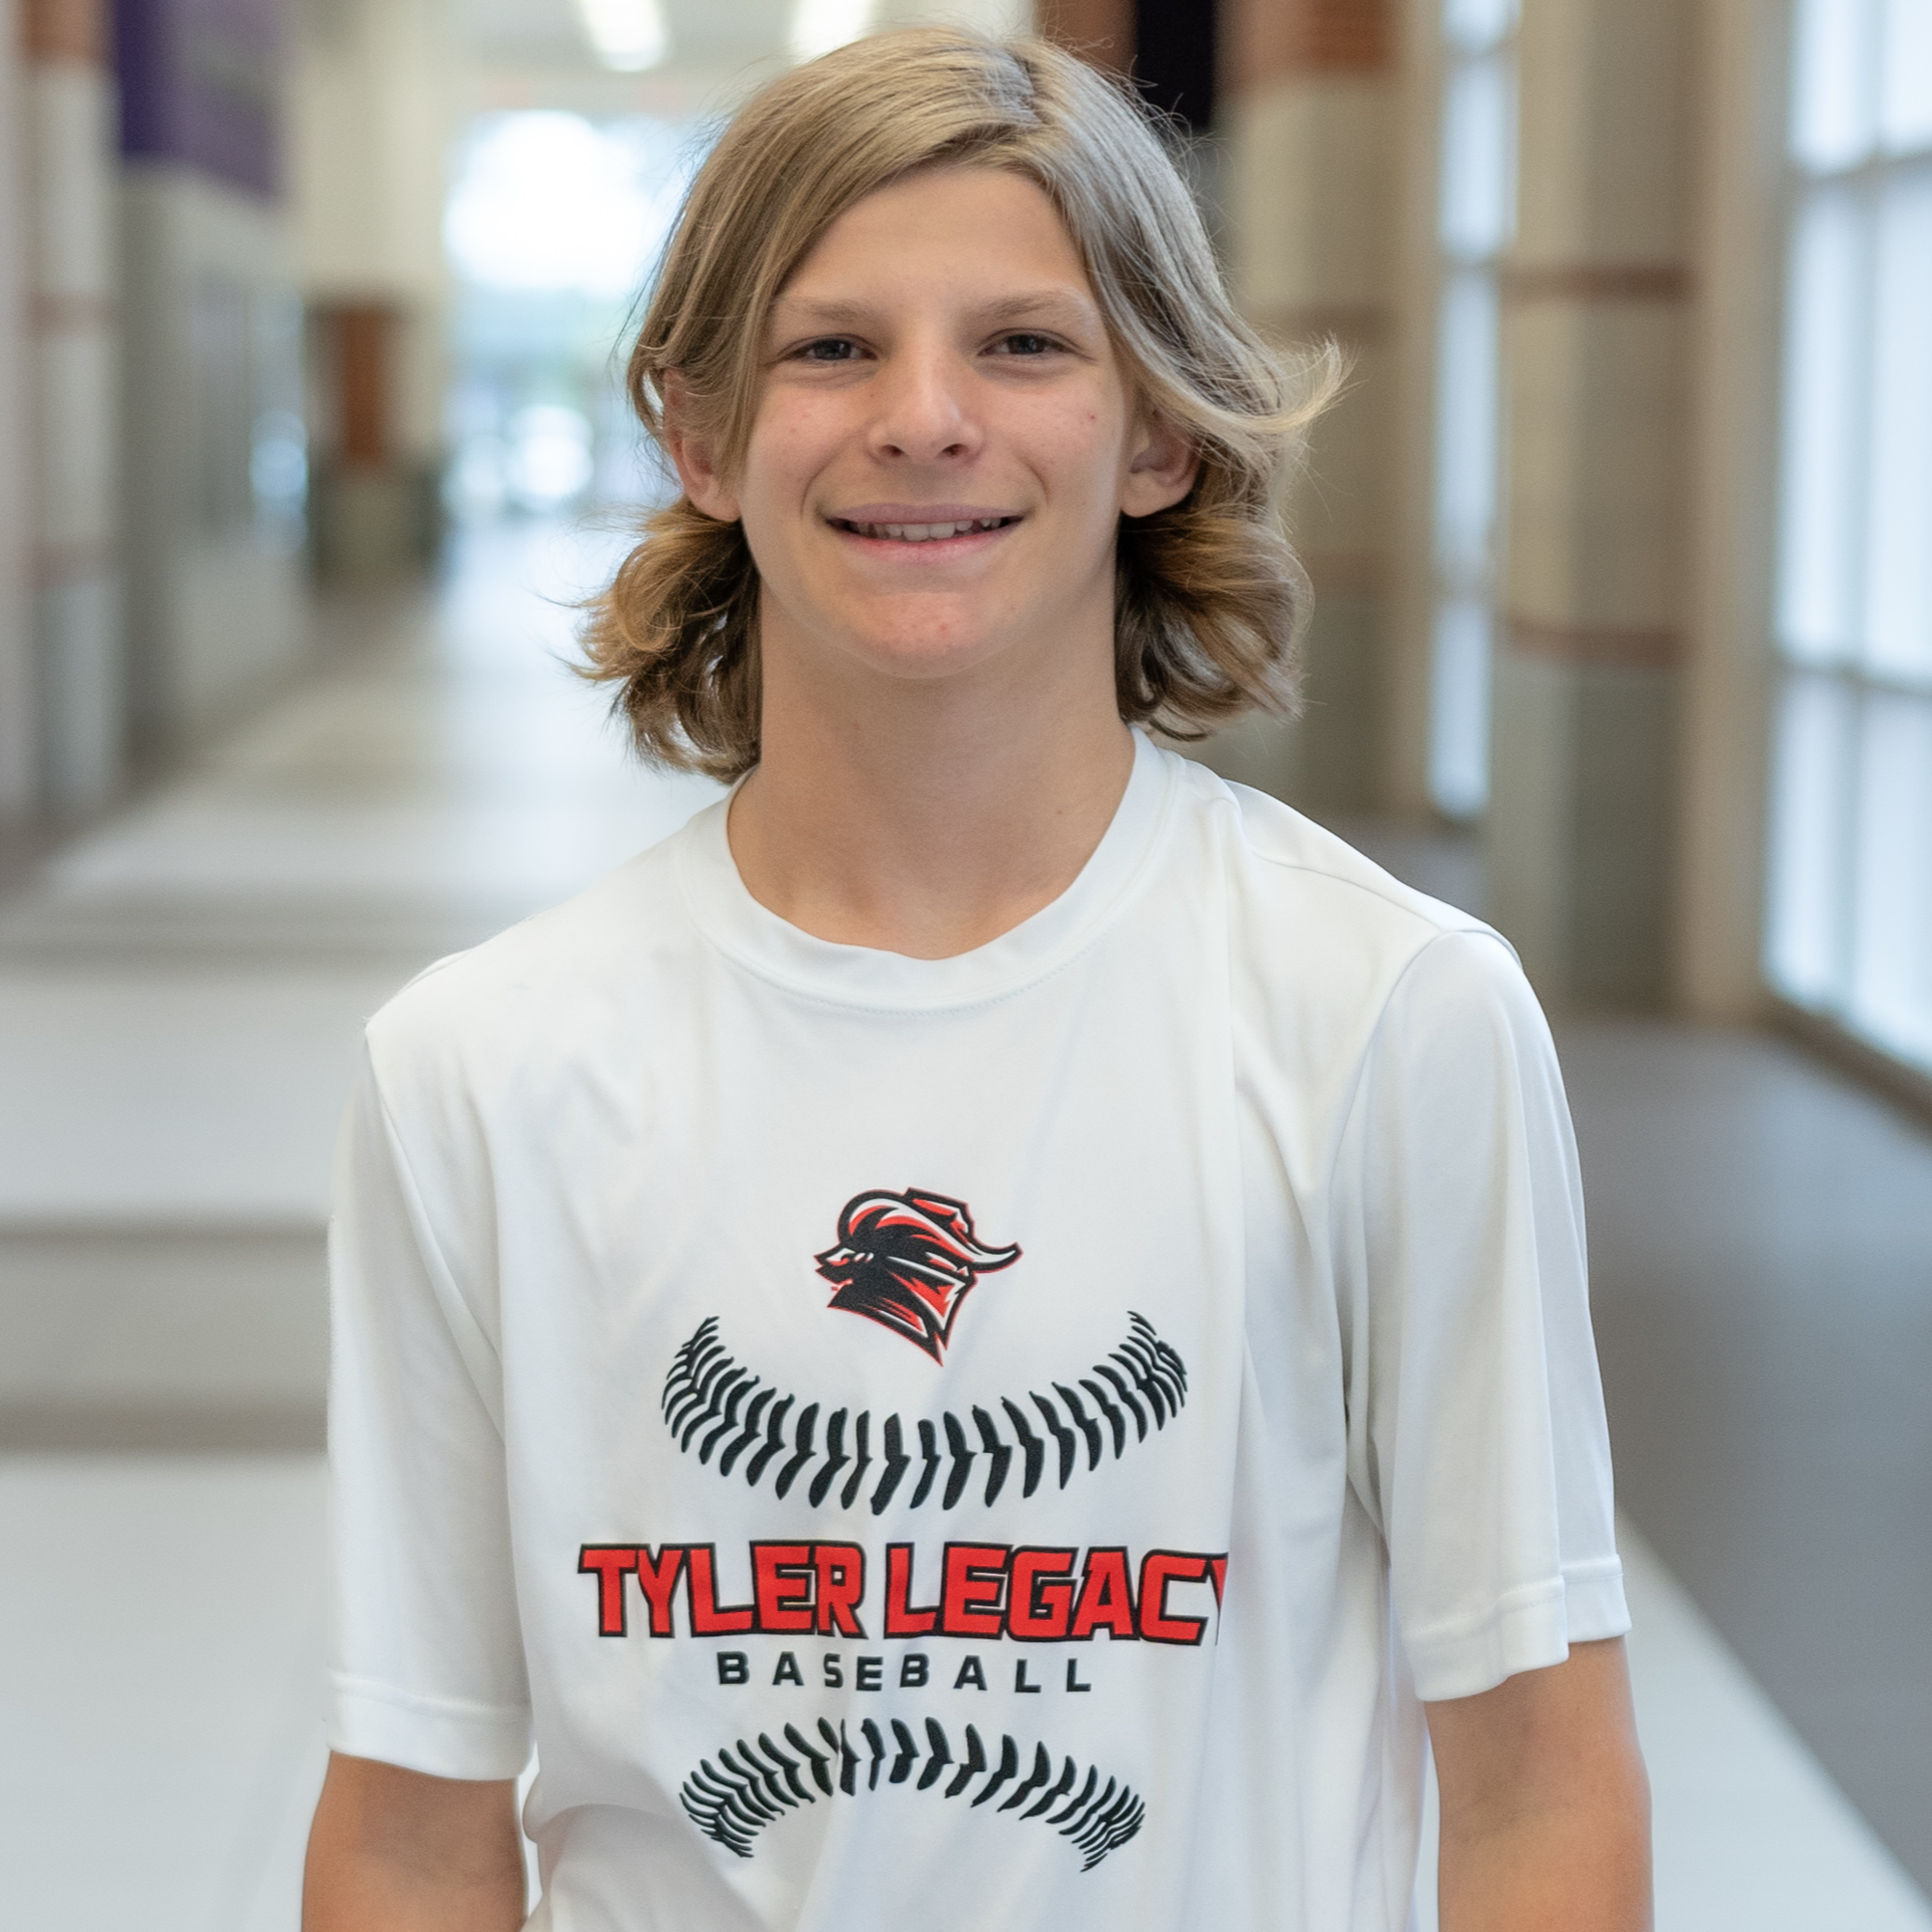 teen boy with long blond hair wearing a Tyler Legacy baseball t-shirt